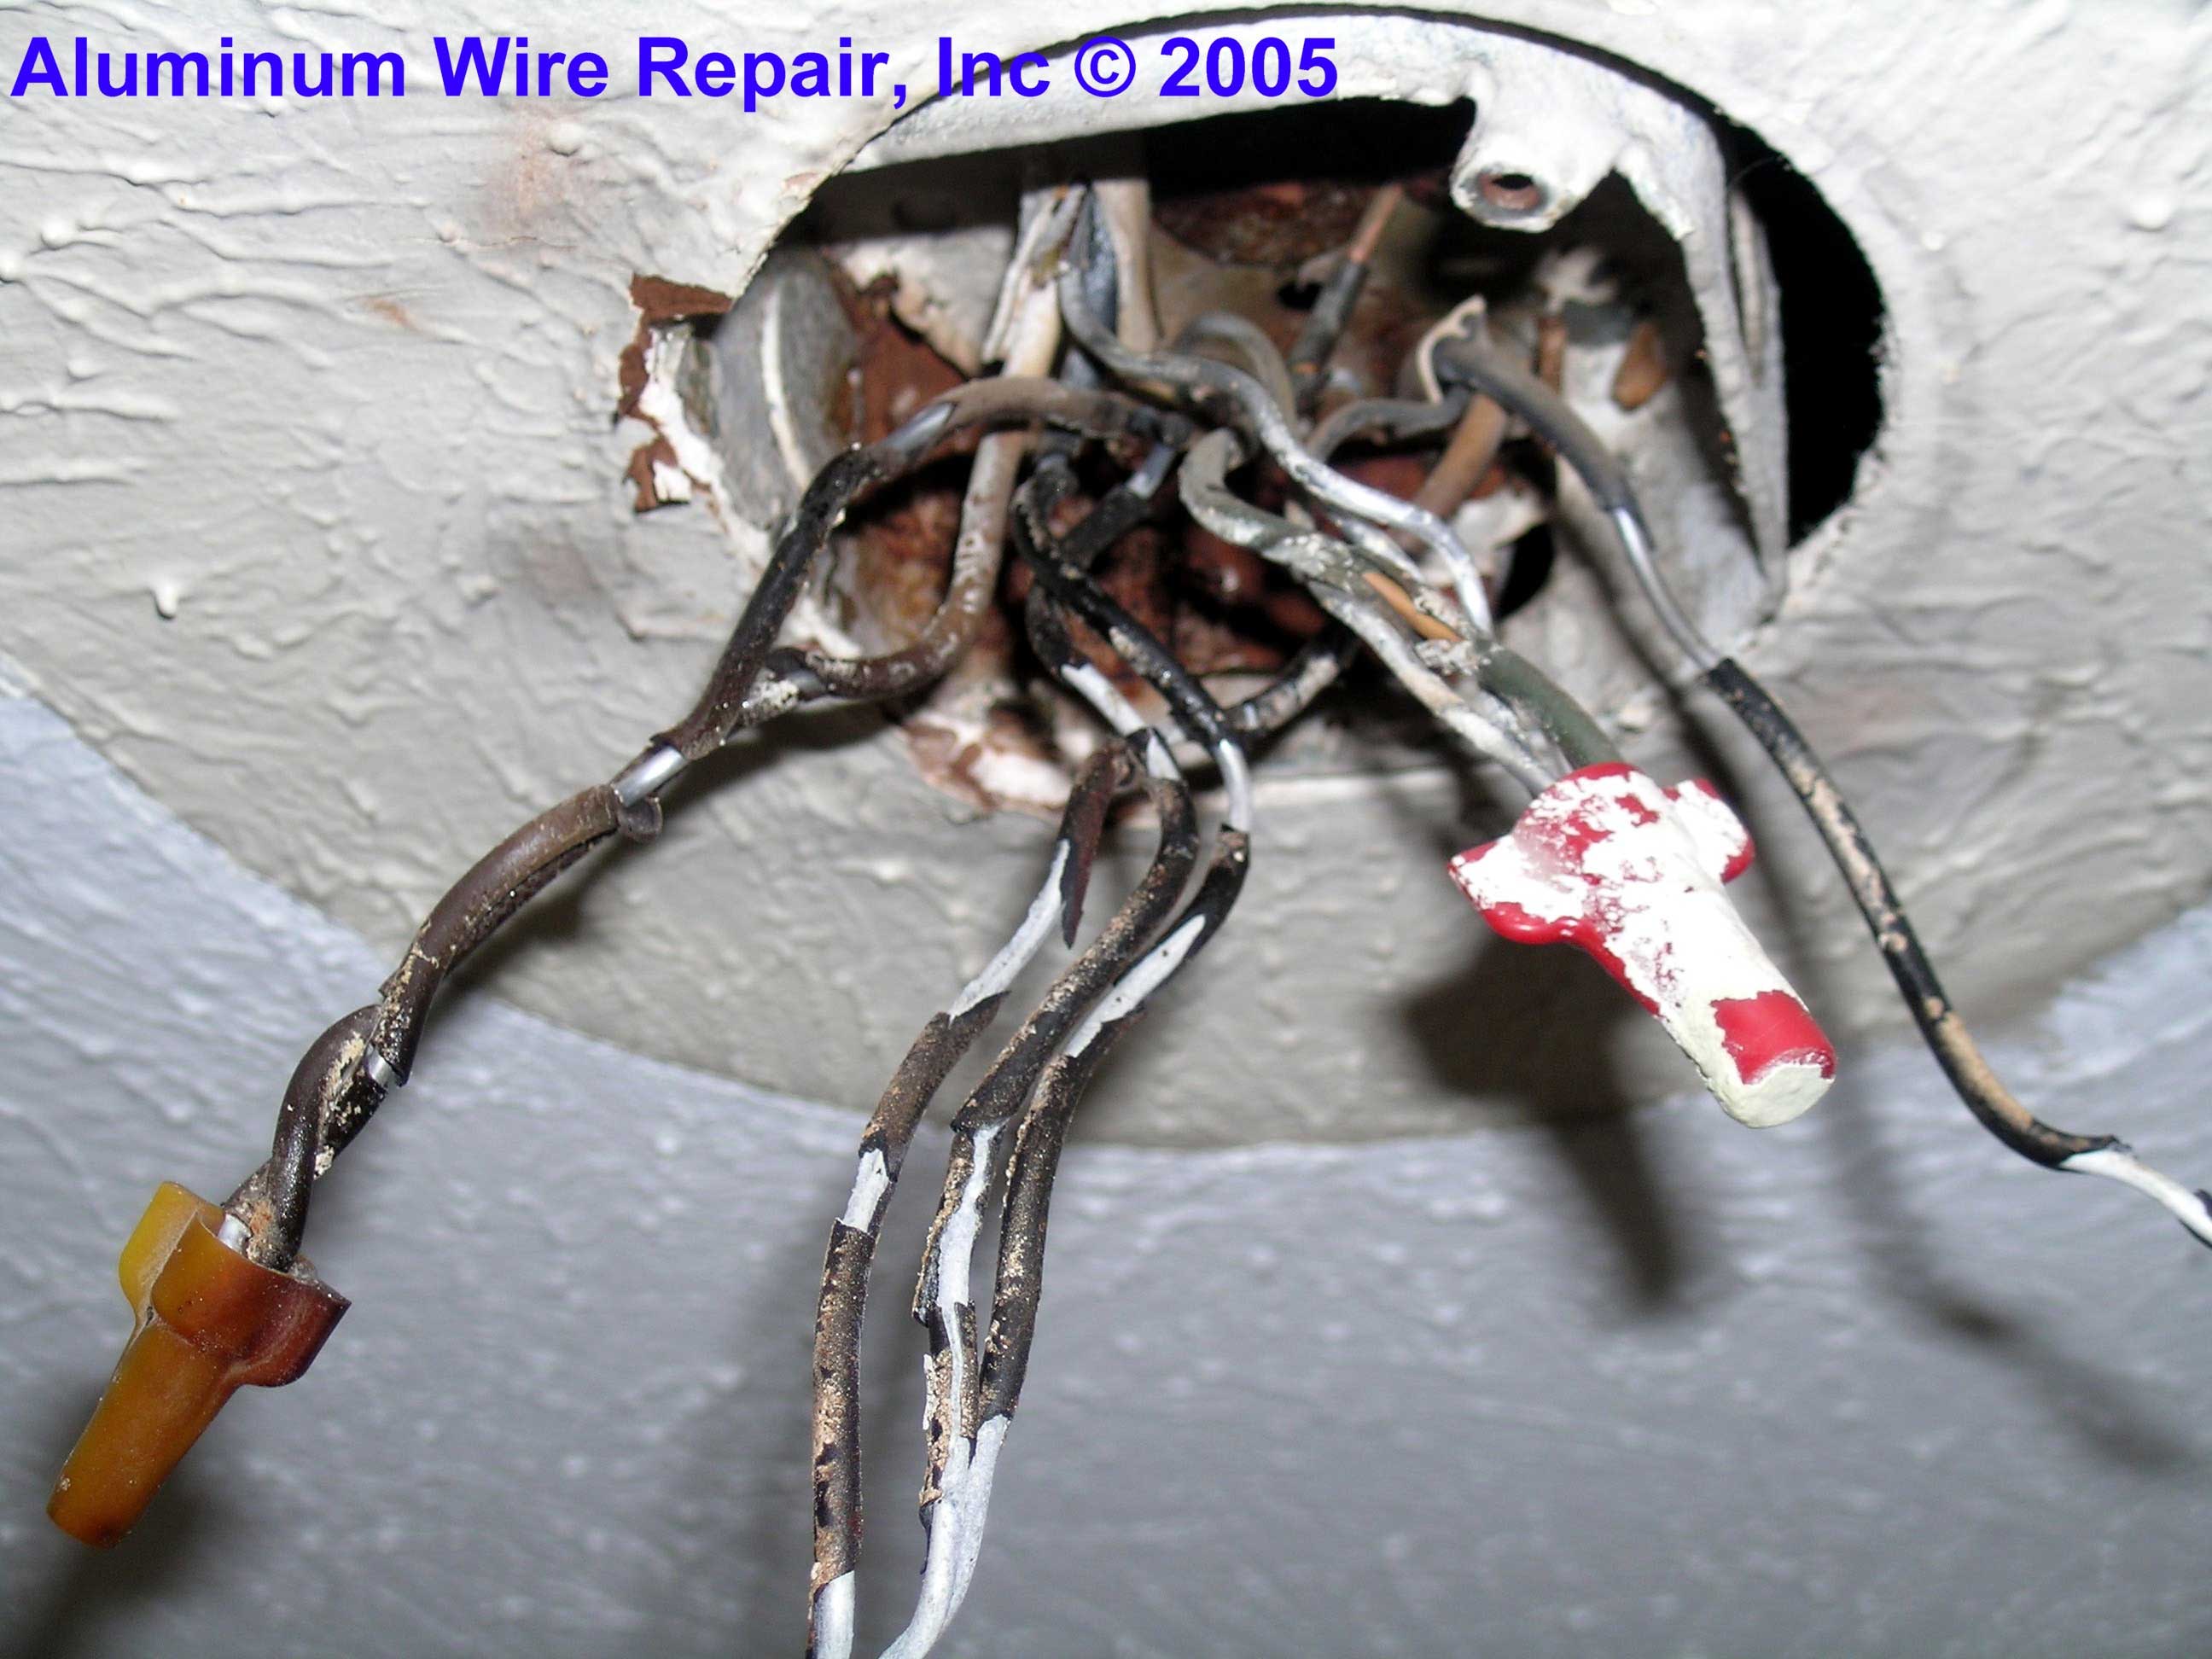 Burned Purple Wirenuts Found in the Field - Aluminum Wire Repair, Inc.